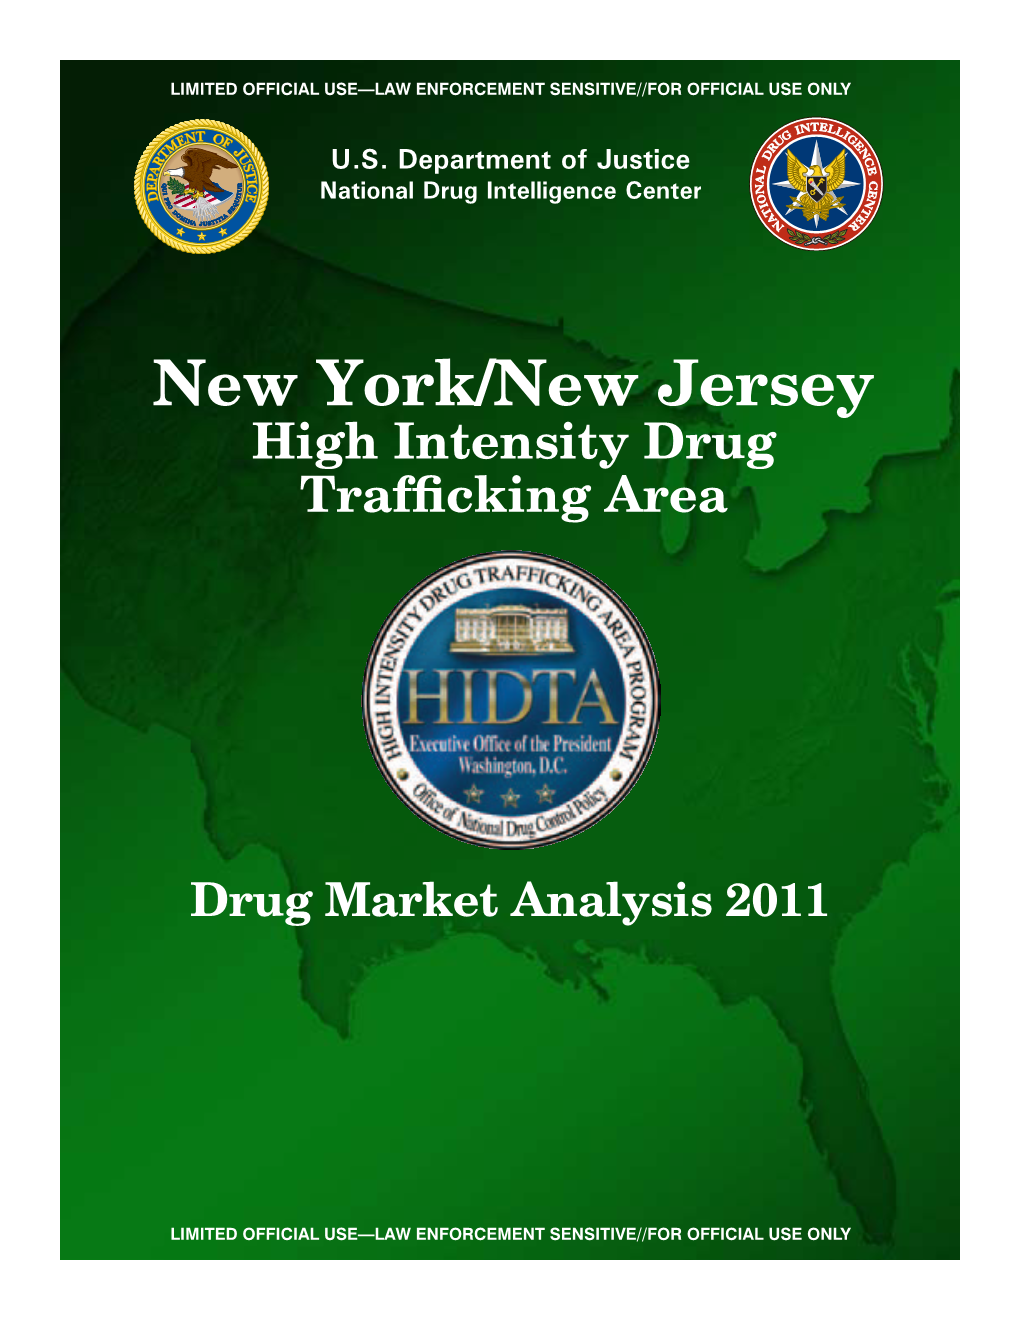 New York/New Jersey High Intensity Drug Trafficking Area